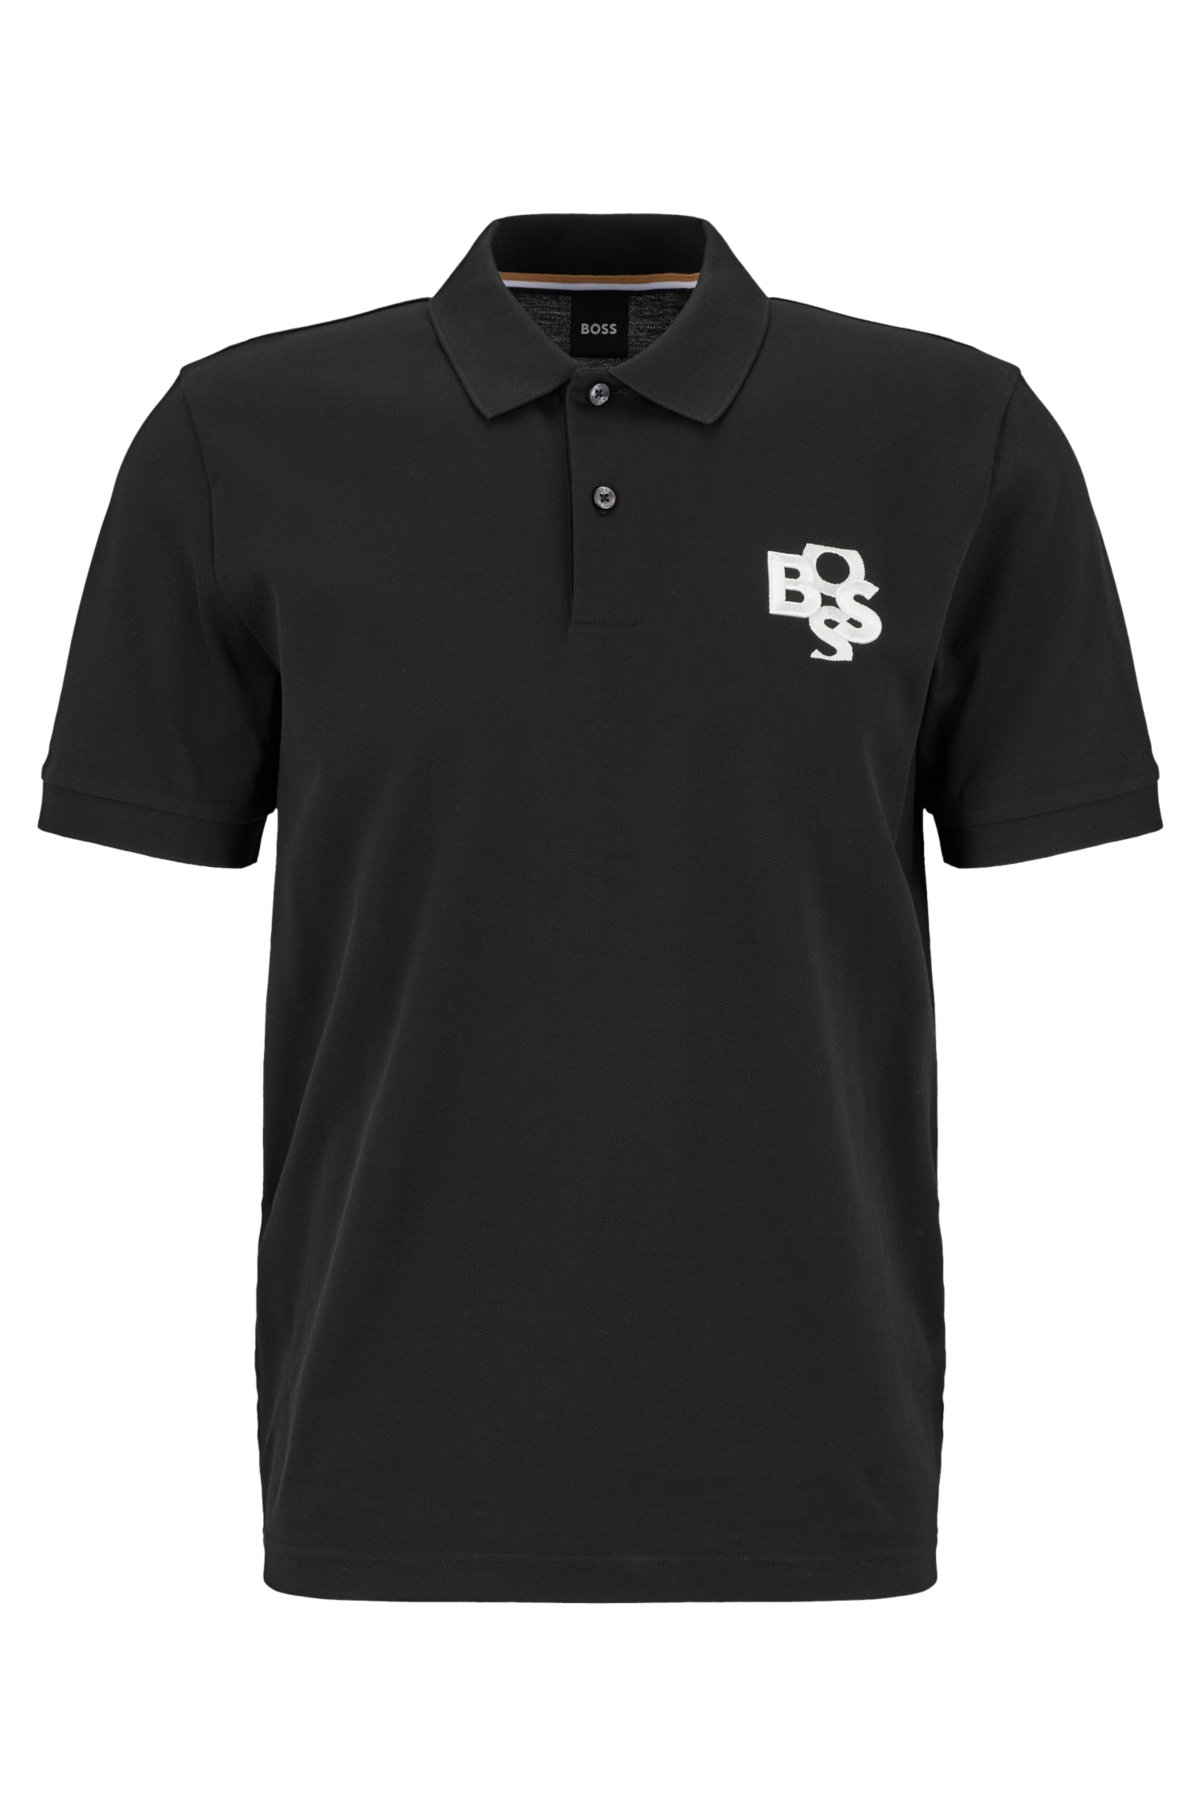 BOSS - logo polo shaken shirt with Mercerised-cotton